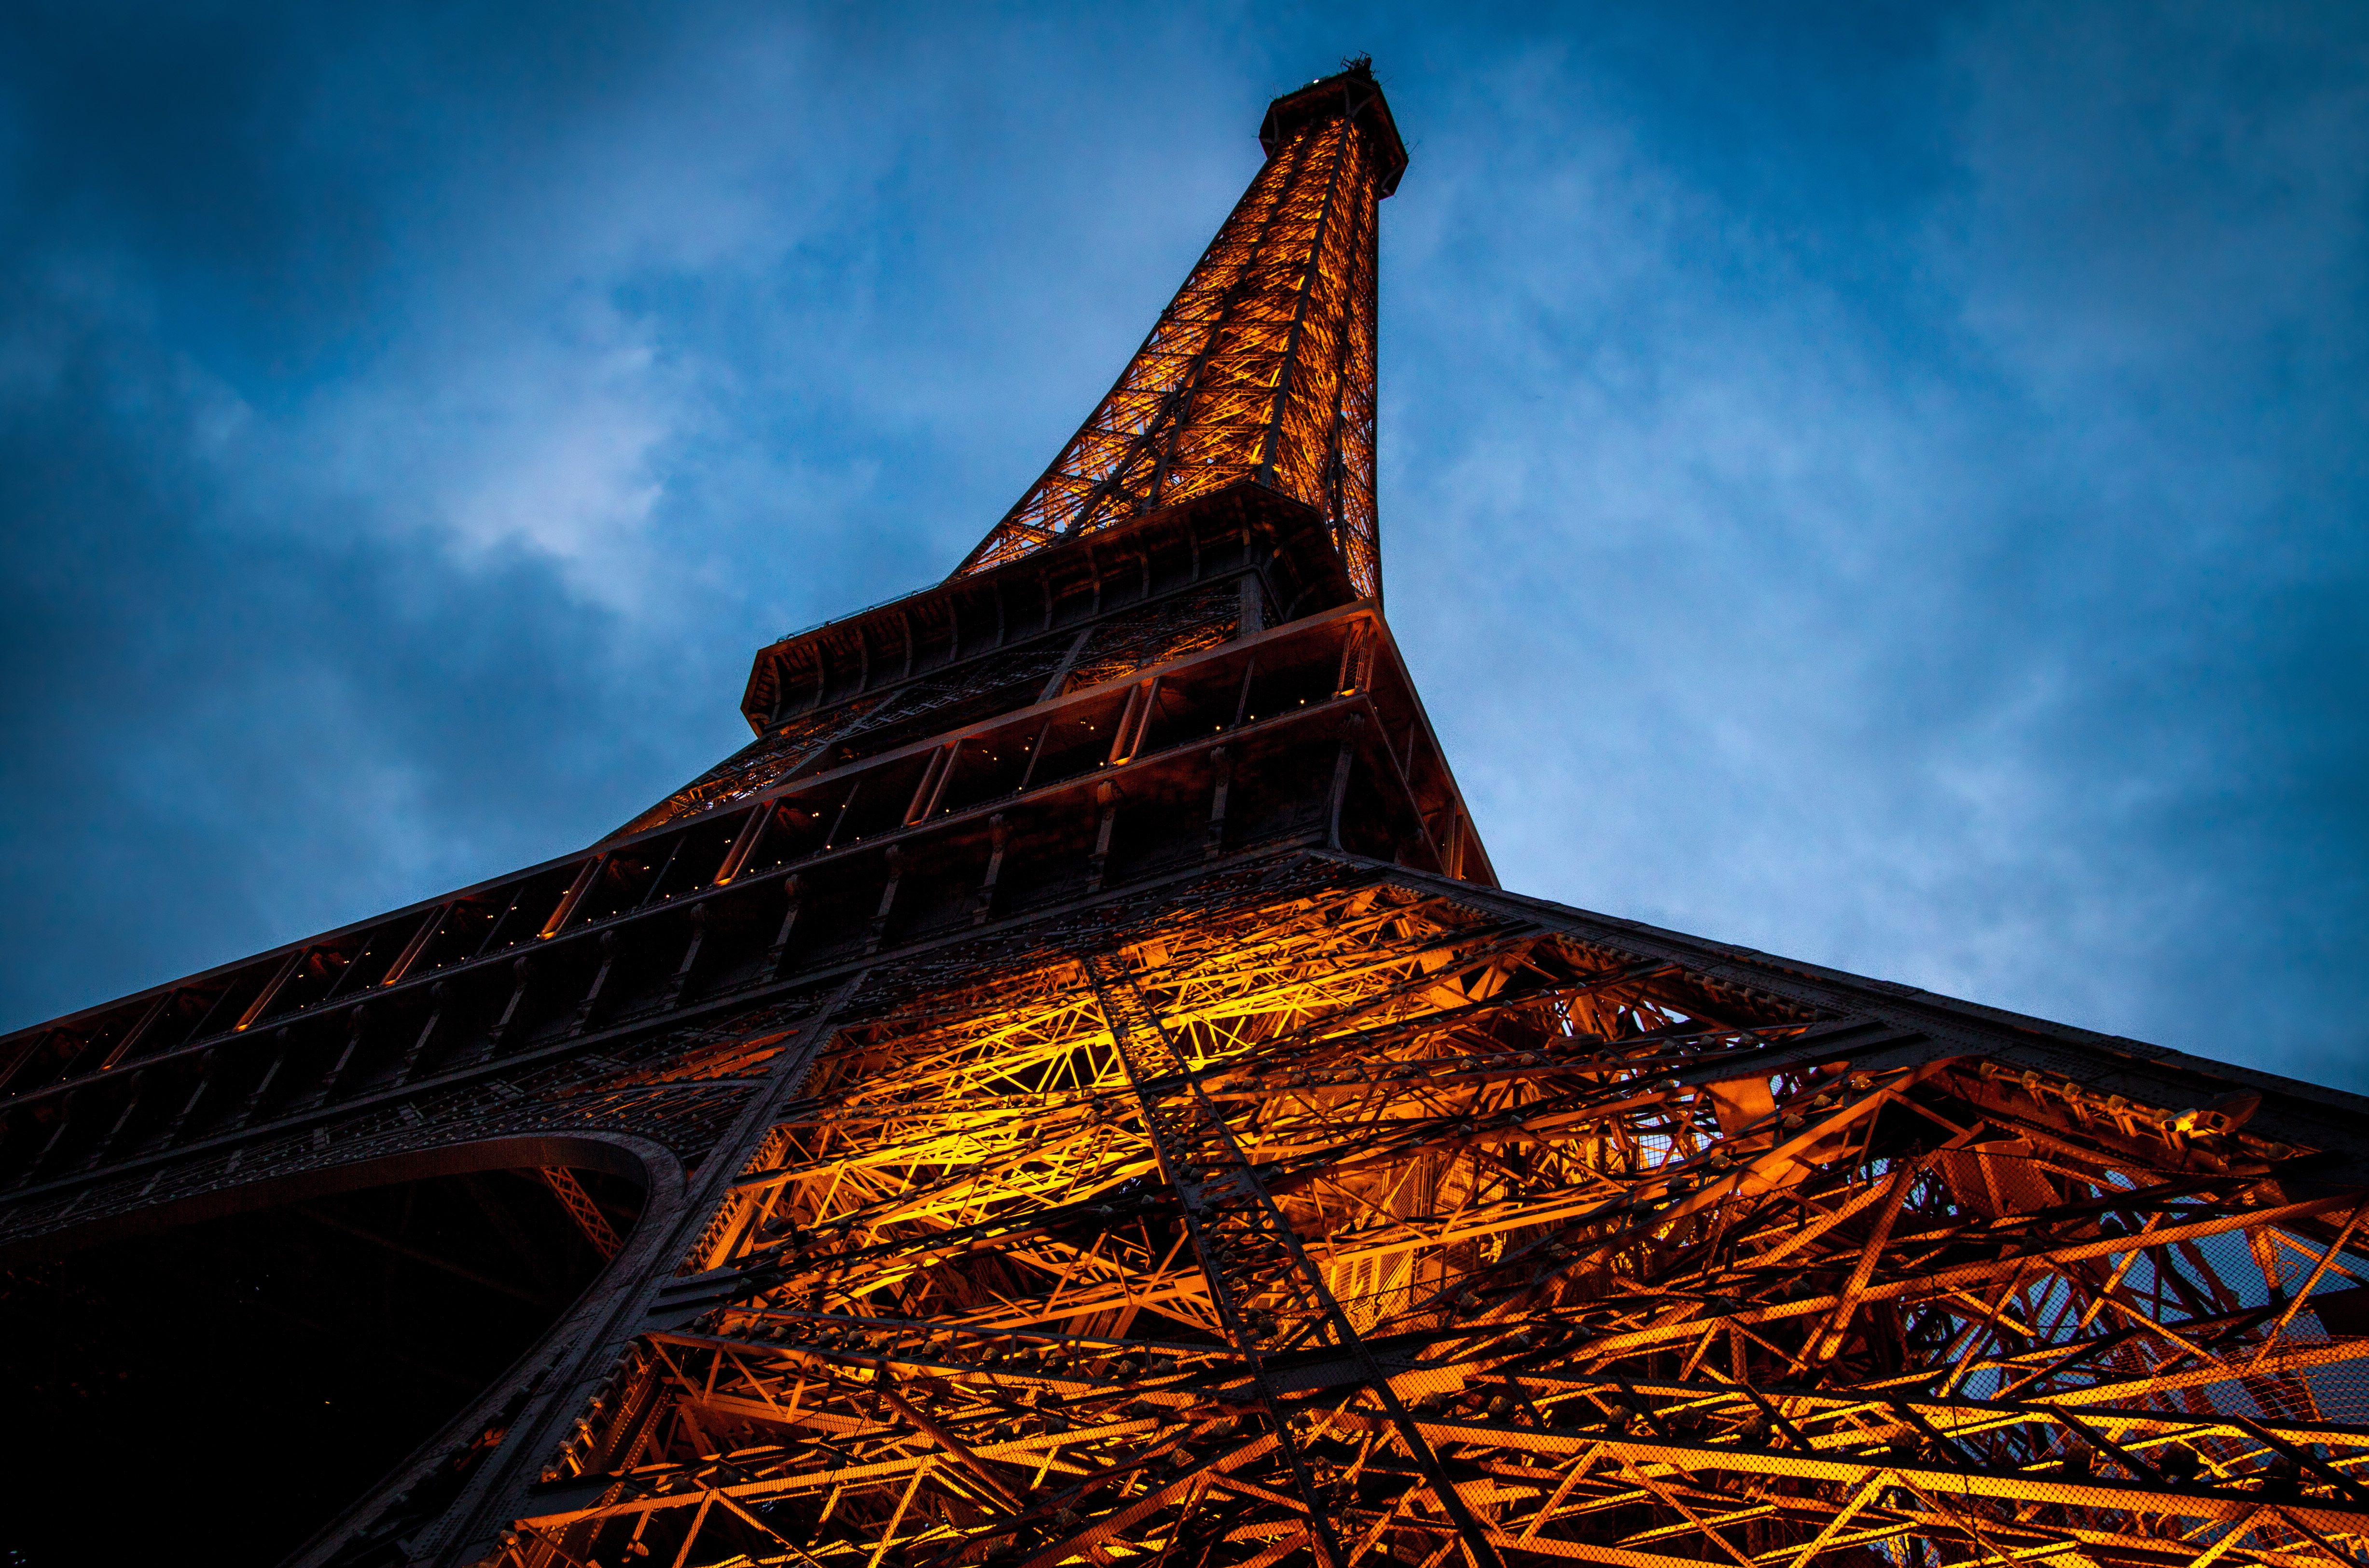 Eiffel Tower evening view, Paris, France, Architecture, Monument, Urban, Travel, HQ Photo